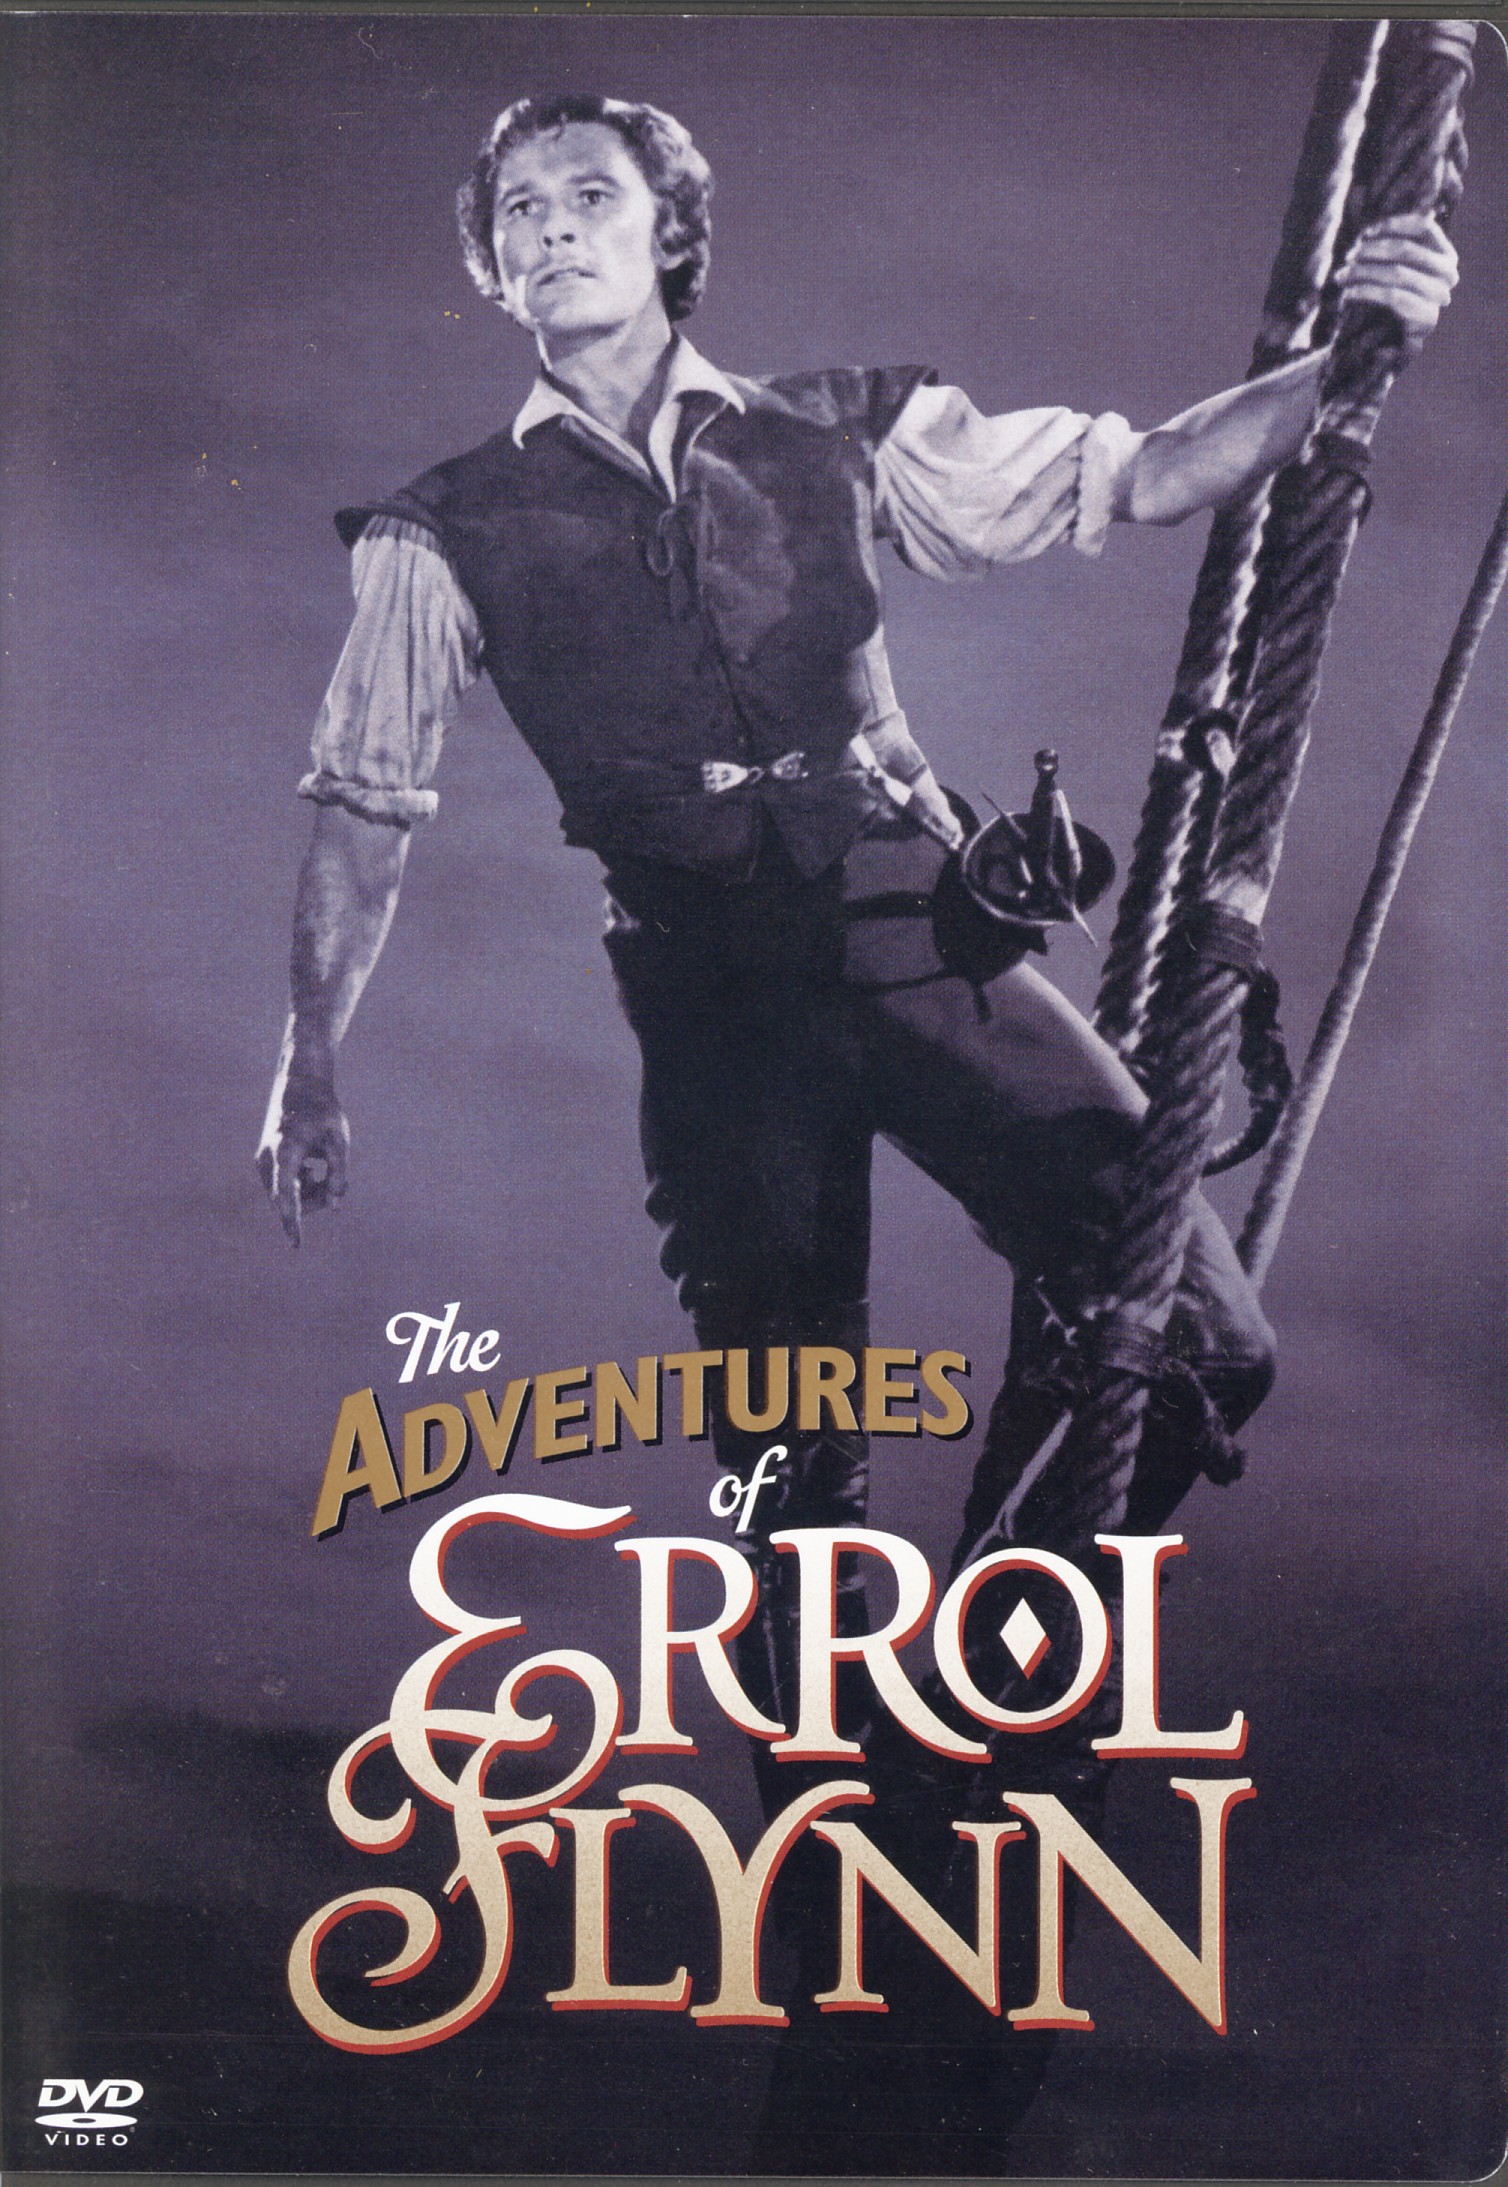 The Adventures of Errol Flynn (2005) Screenshot 2 